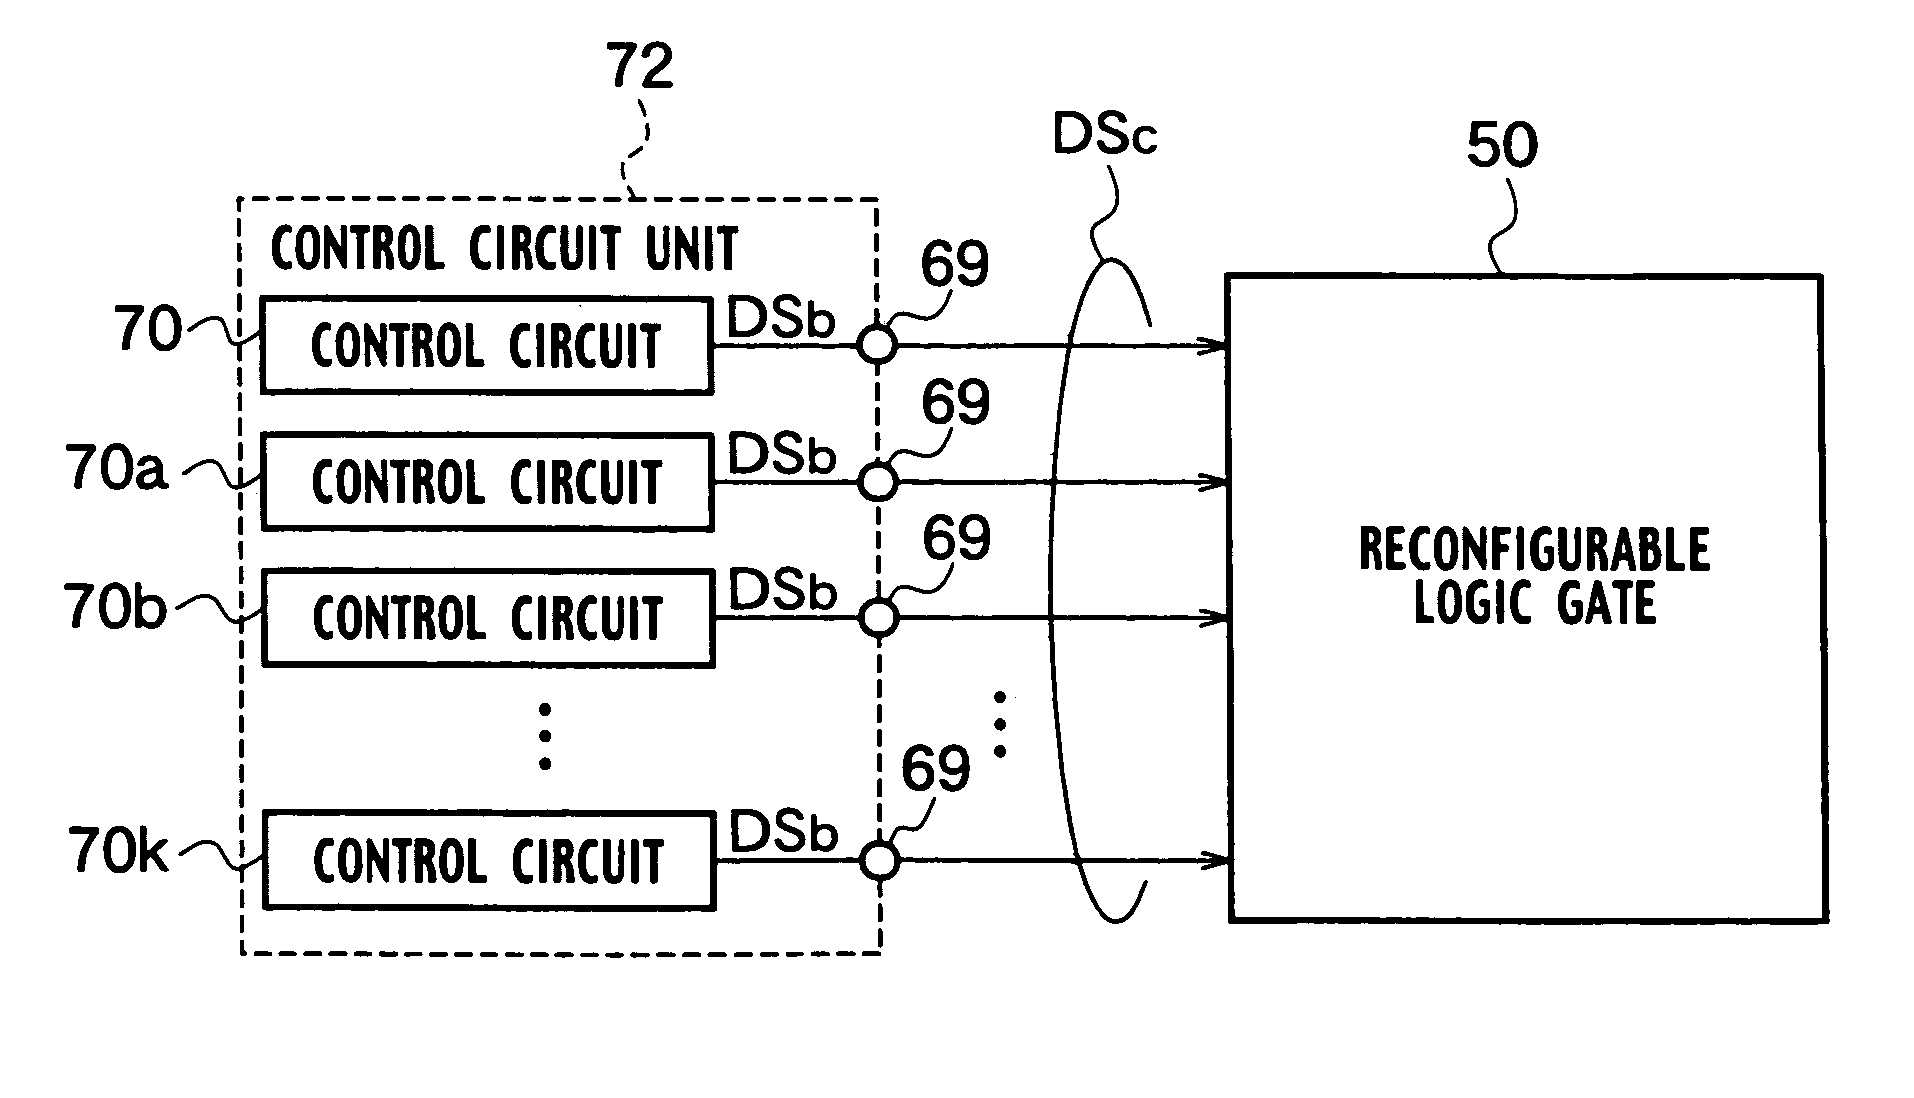 Control circuit and reconfigurable logic block